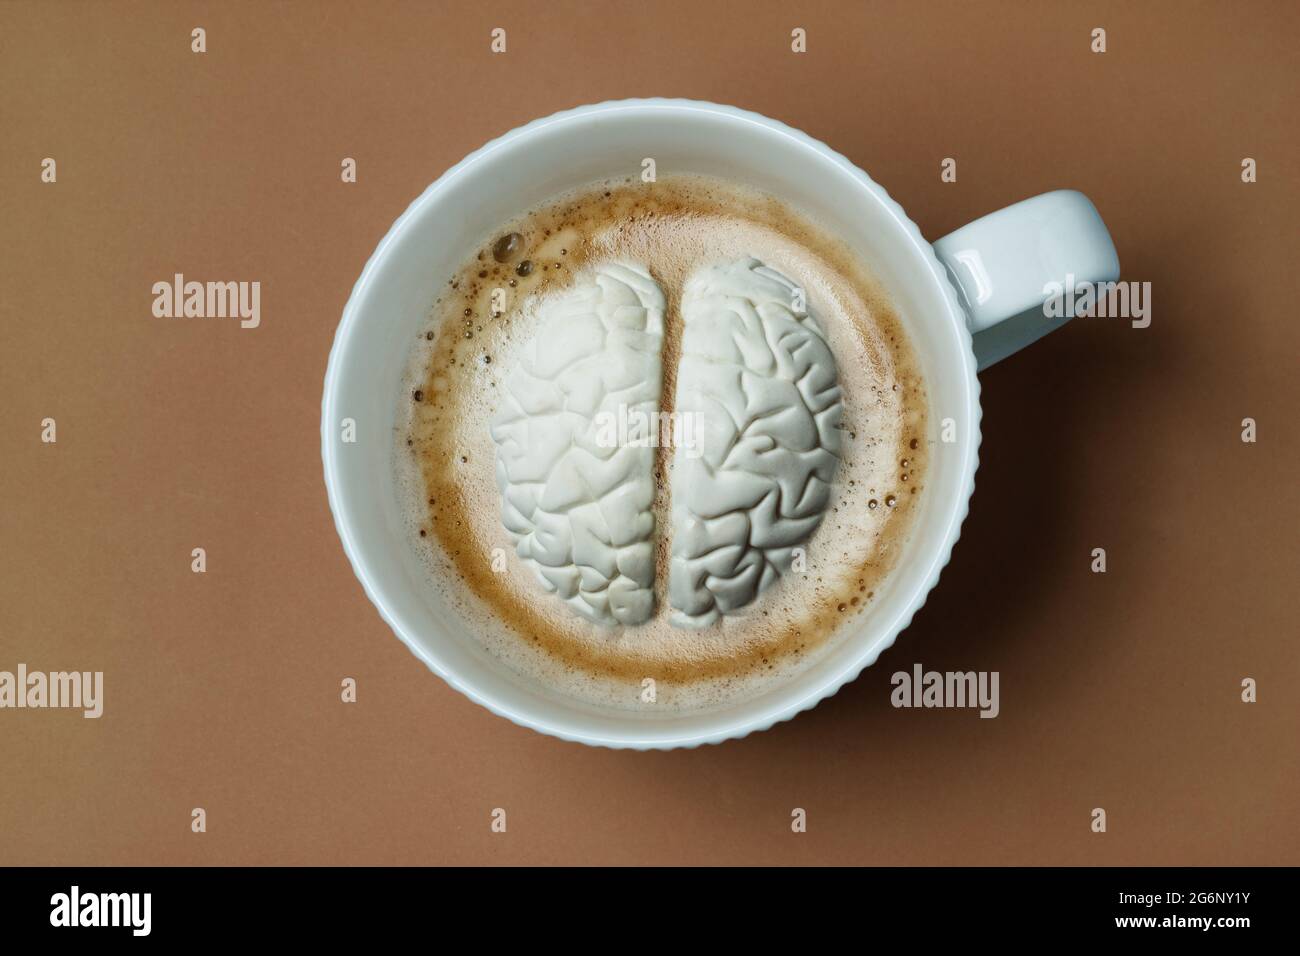 Brain submerged like marshmallow in coffee cup Stock Photo